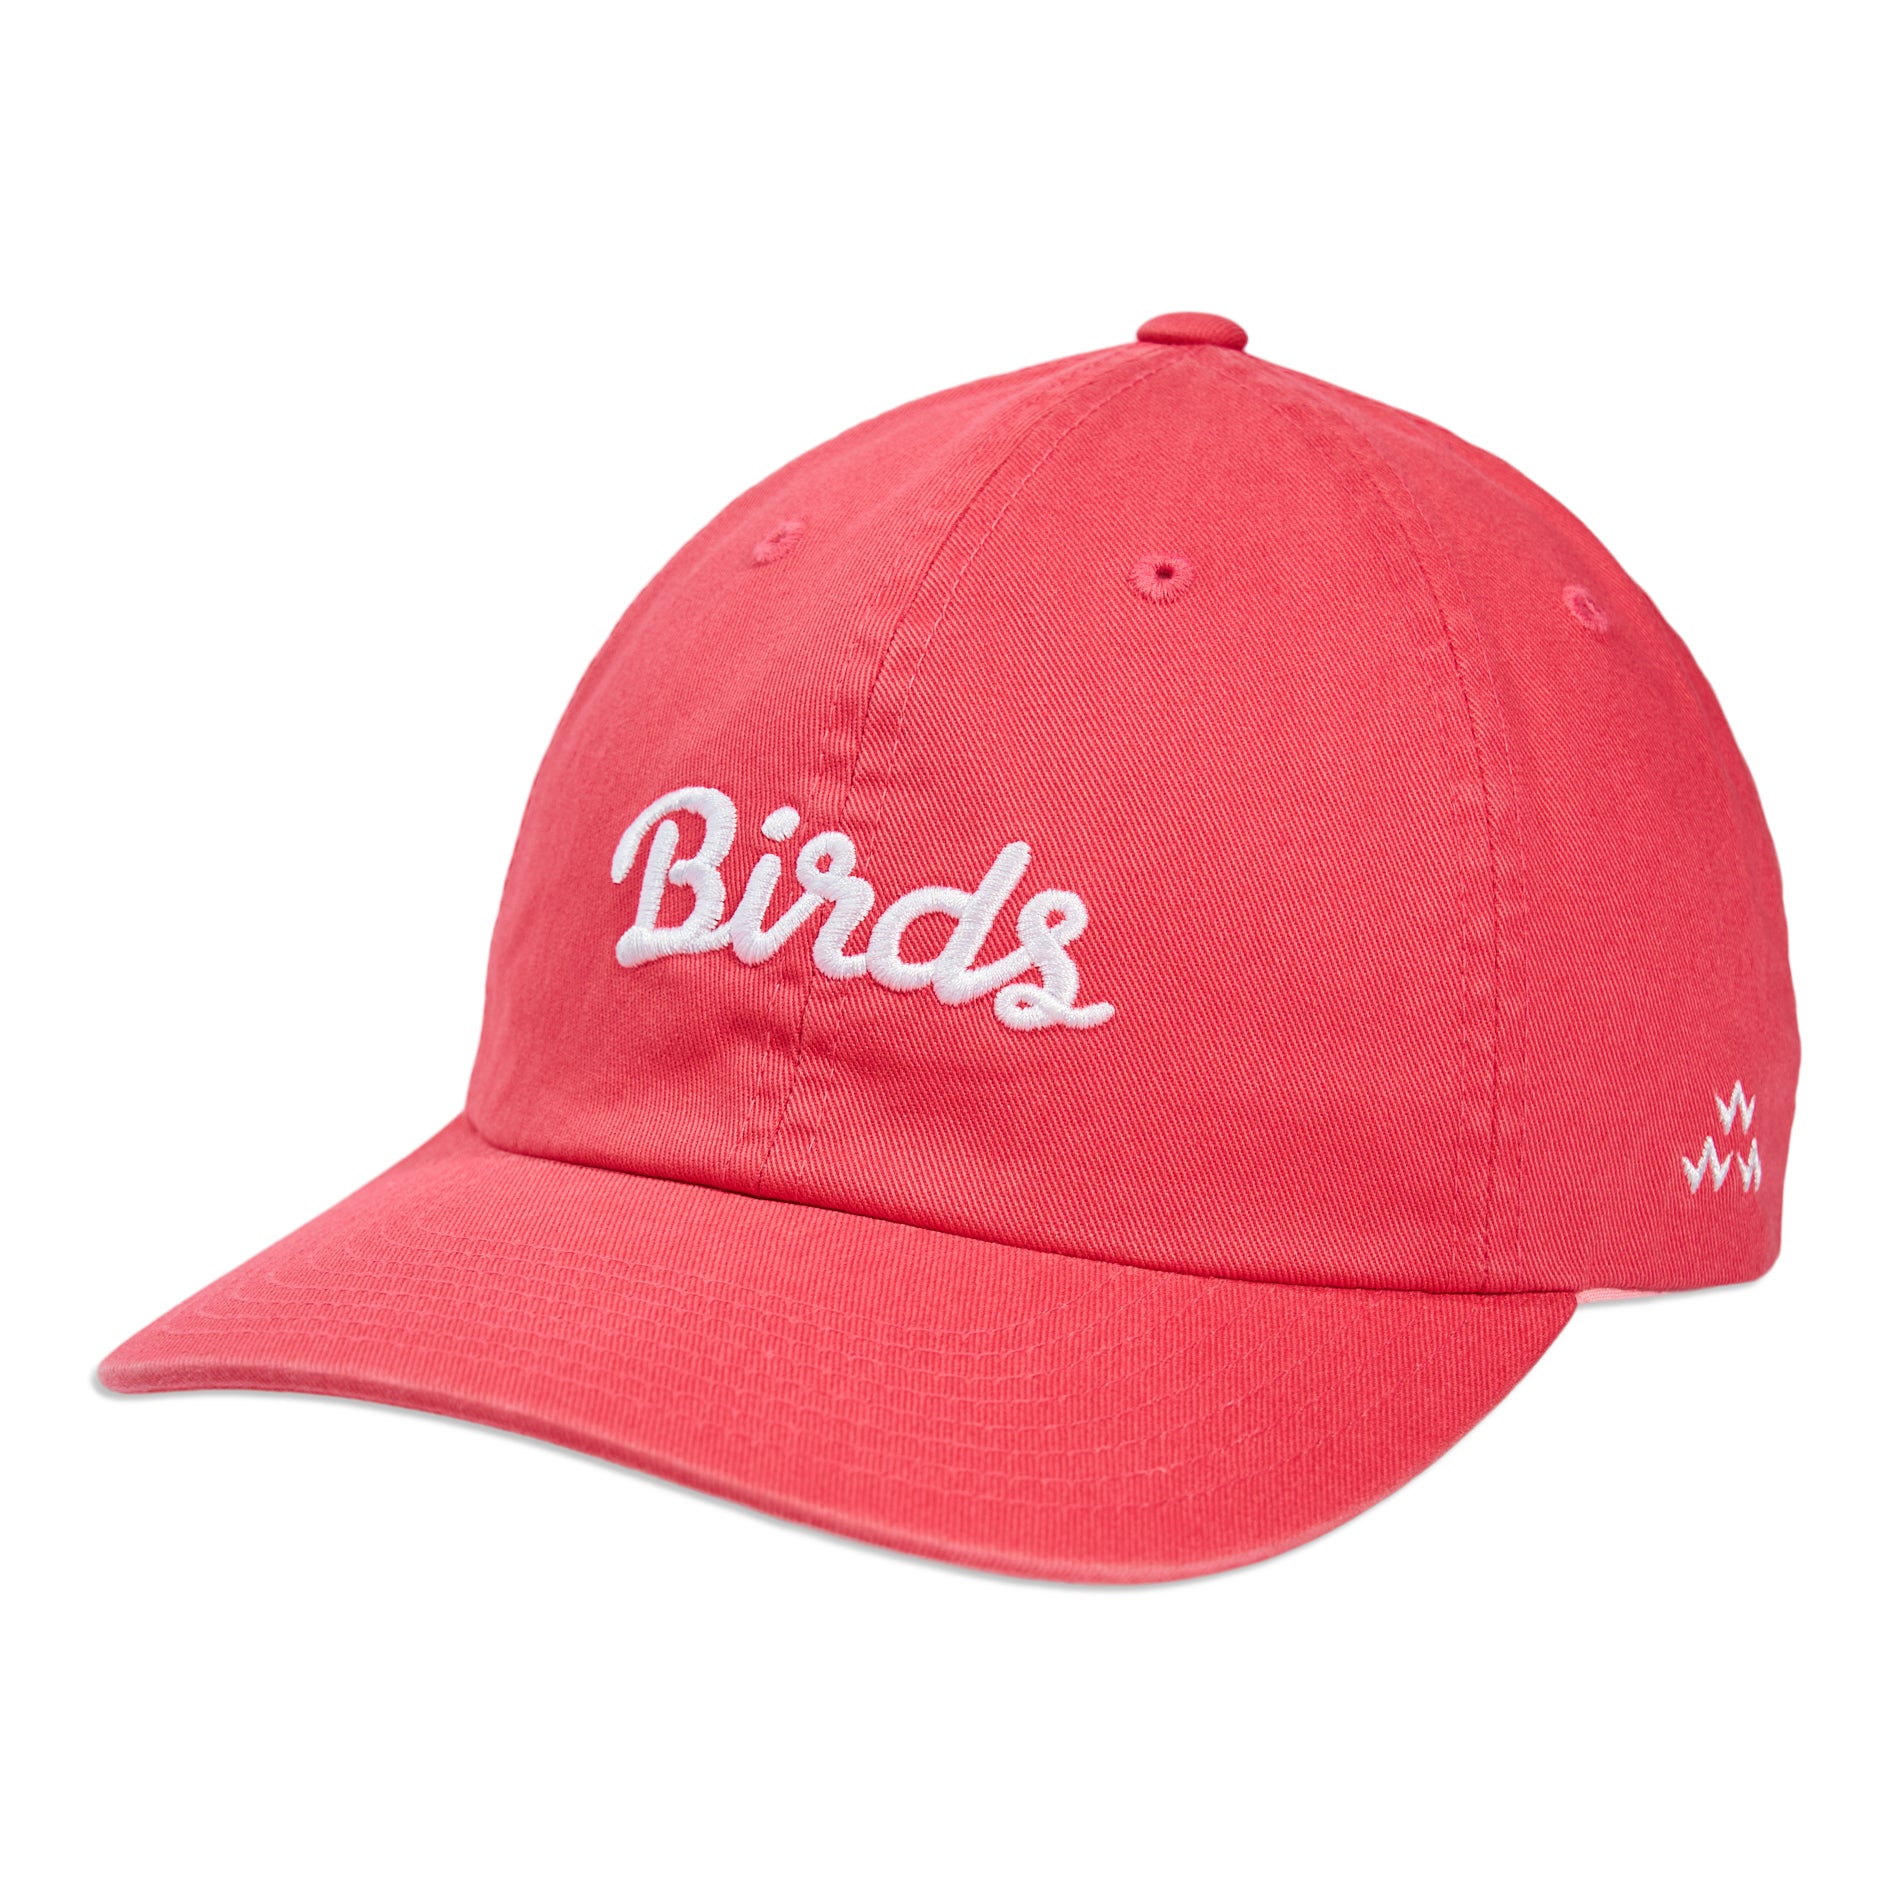 birds-of-condor-pink-golf-dad-cap-hat-front